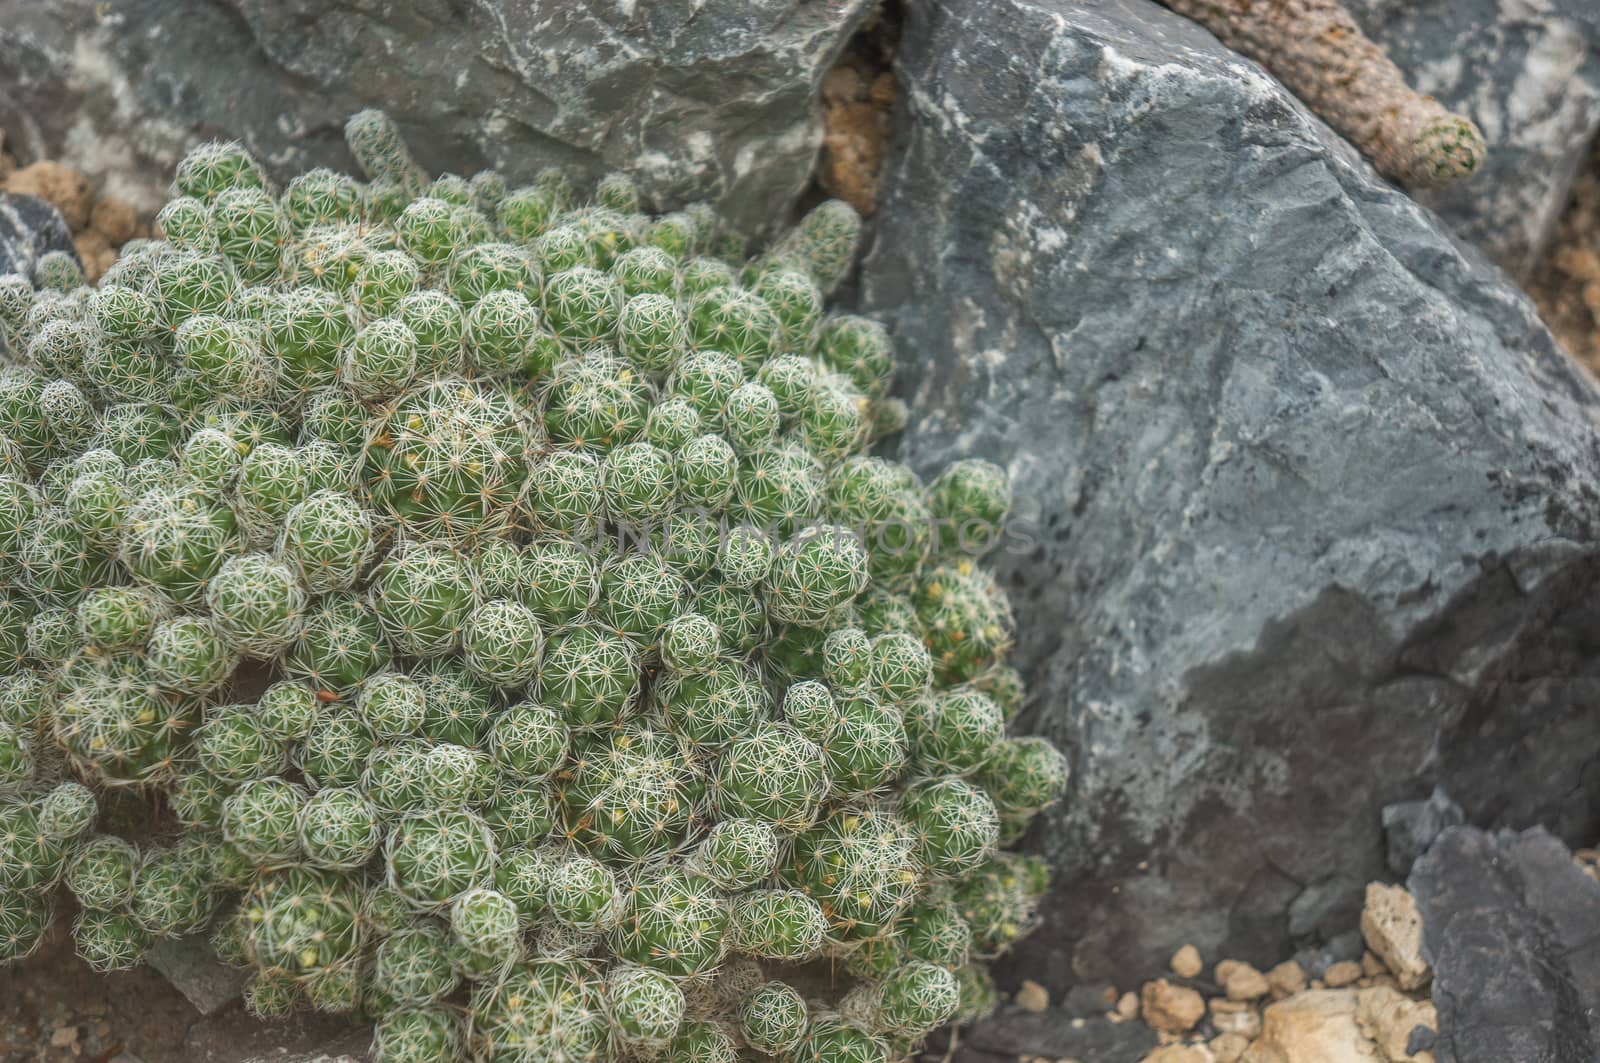 Large cluster of green thimble cactus "mammillaria gracilis" by sara_lissaker